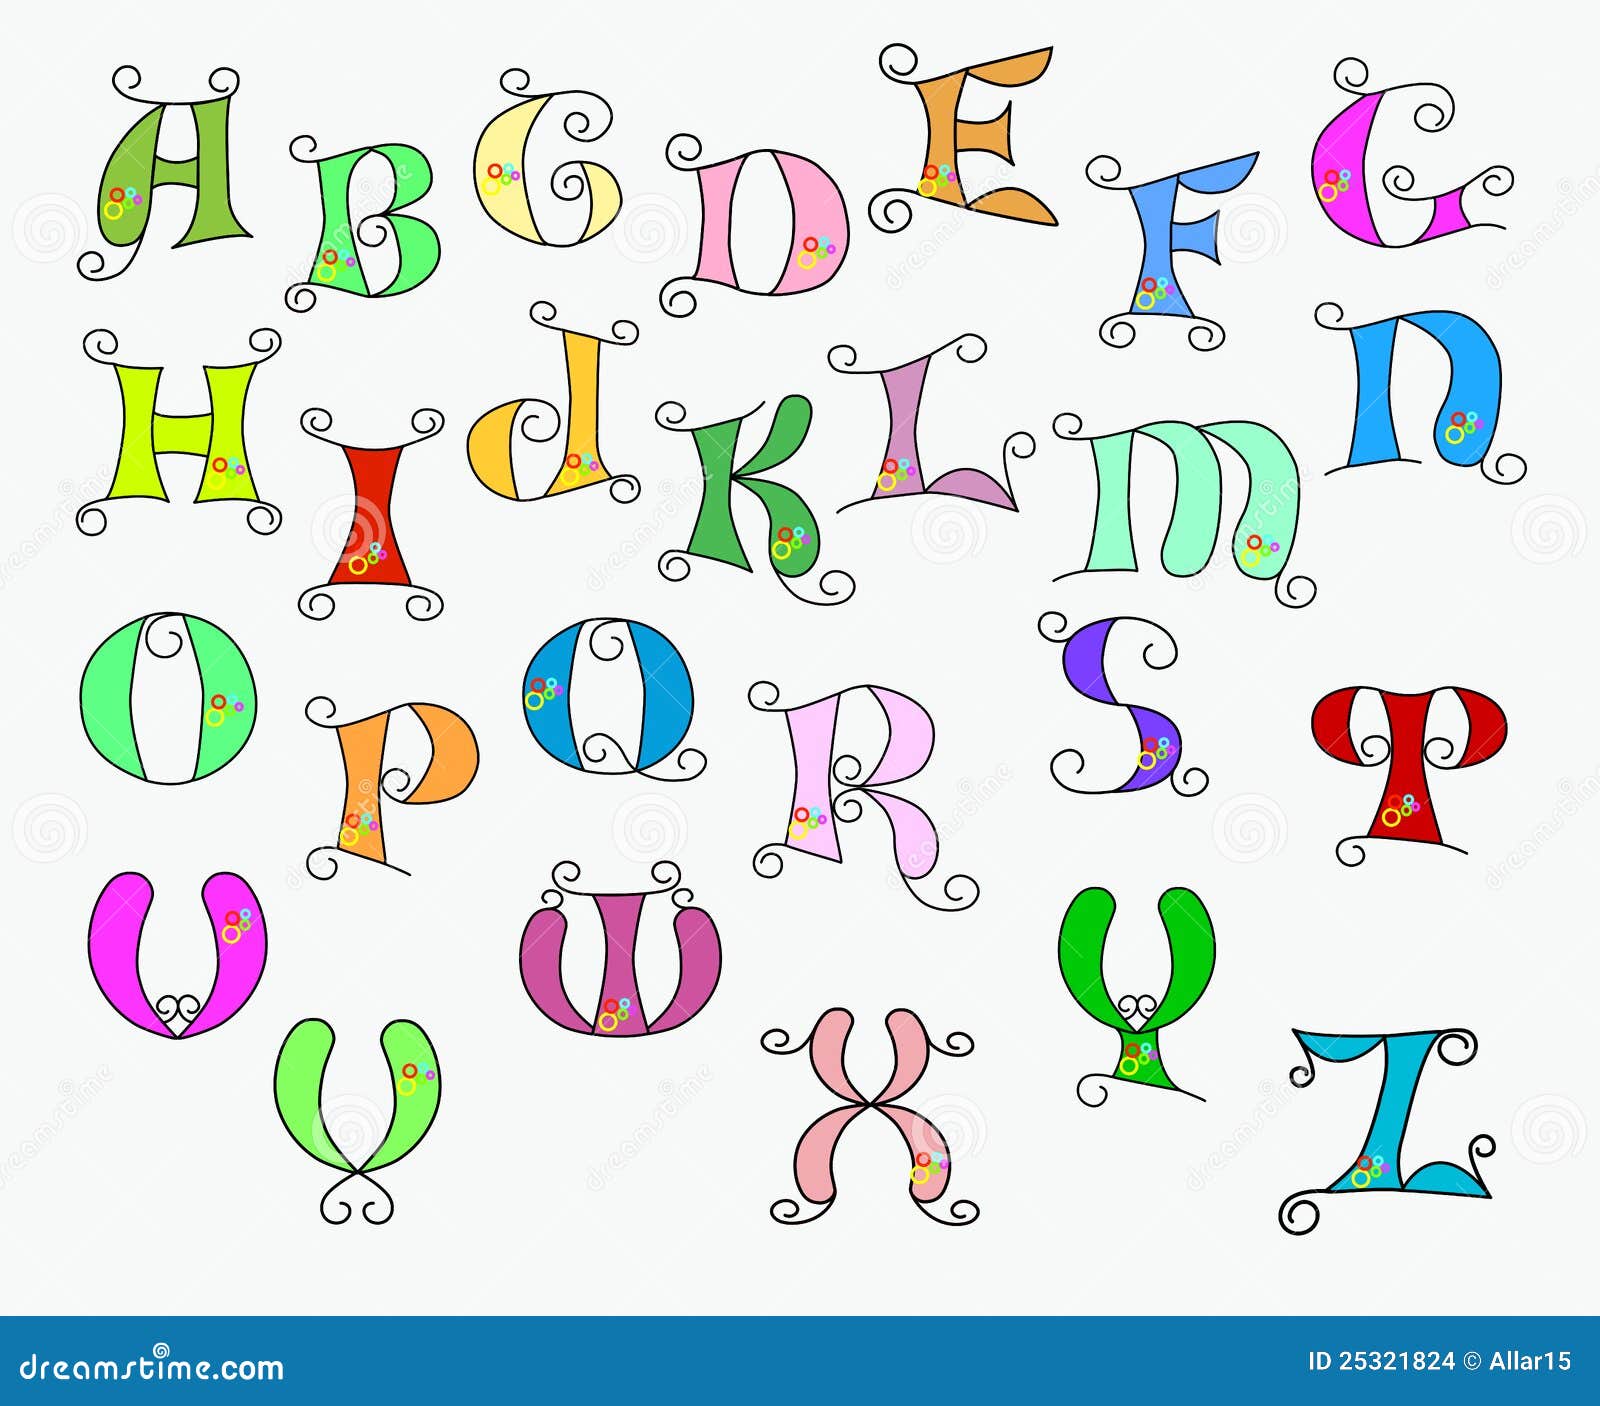 Illustration of Colorful Funky Alphabet Stock Illustration ...